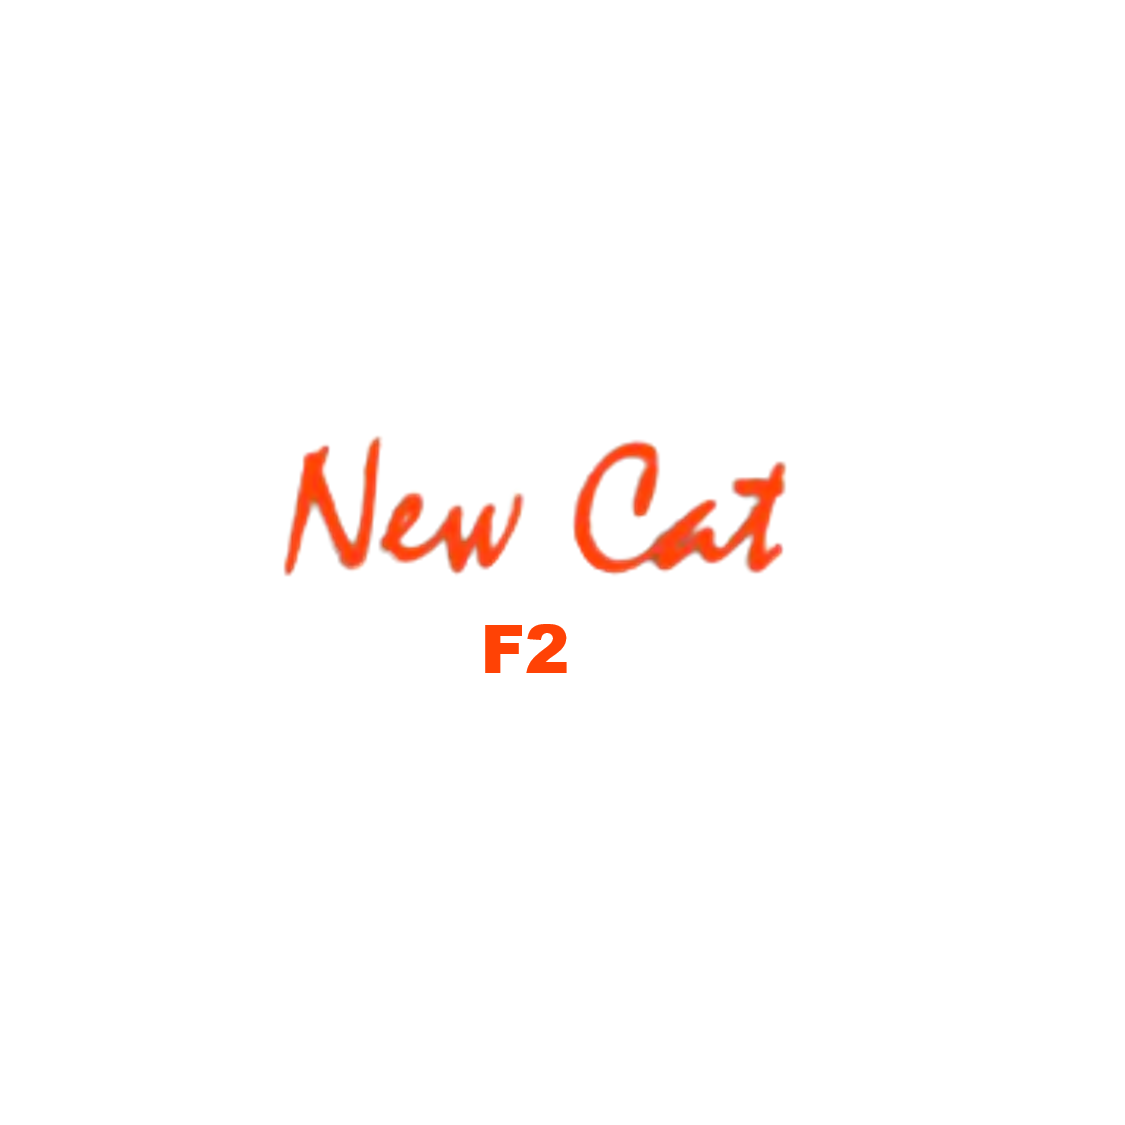 New cat F2